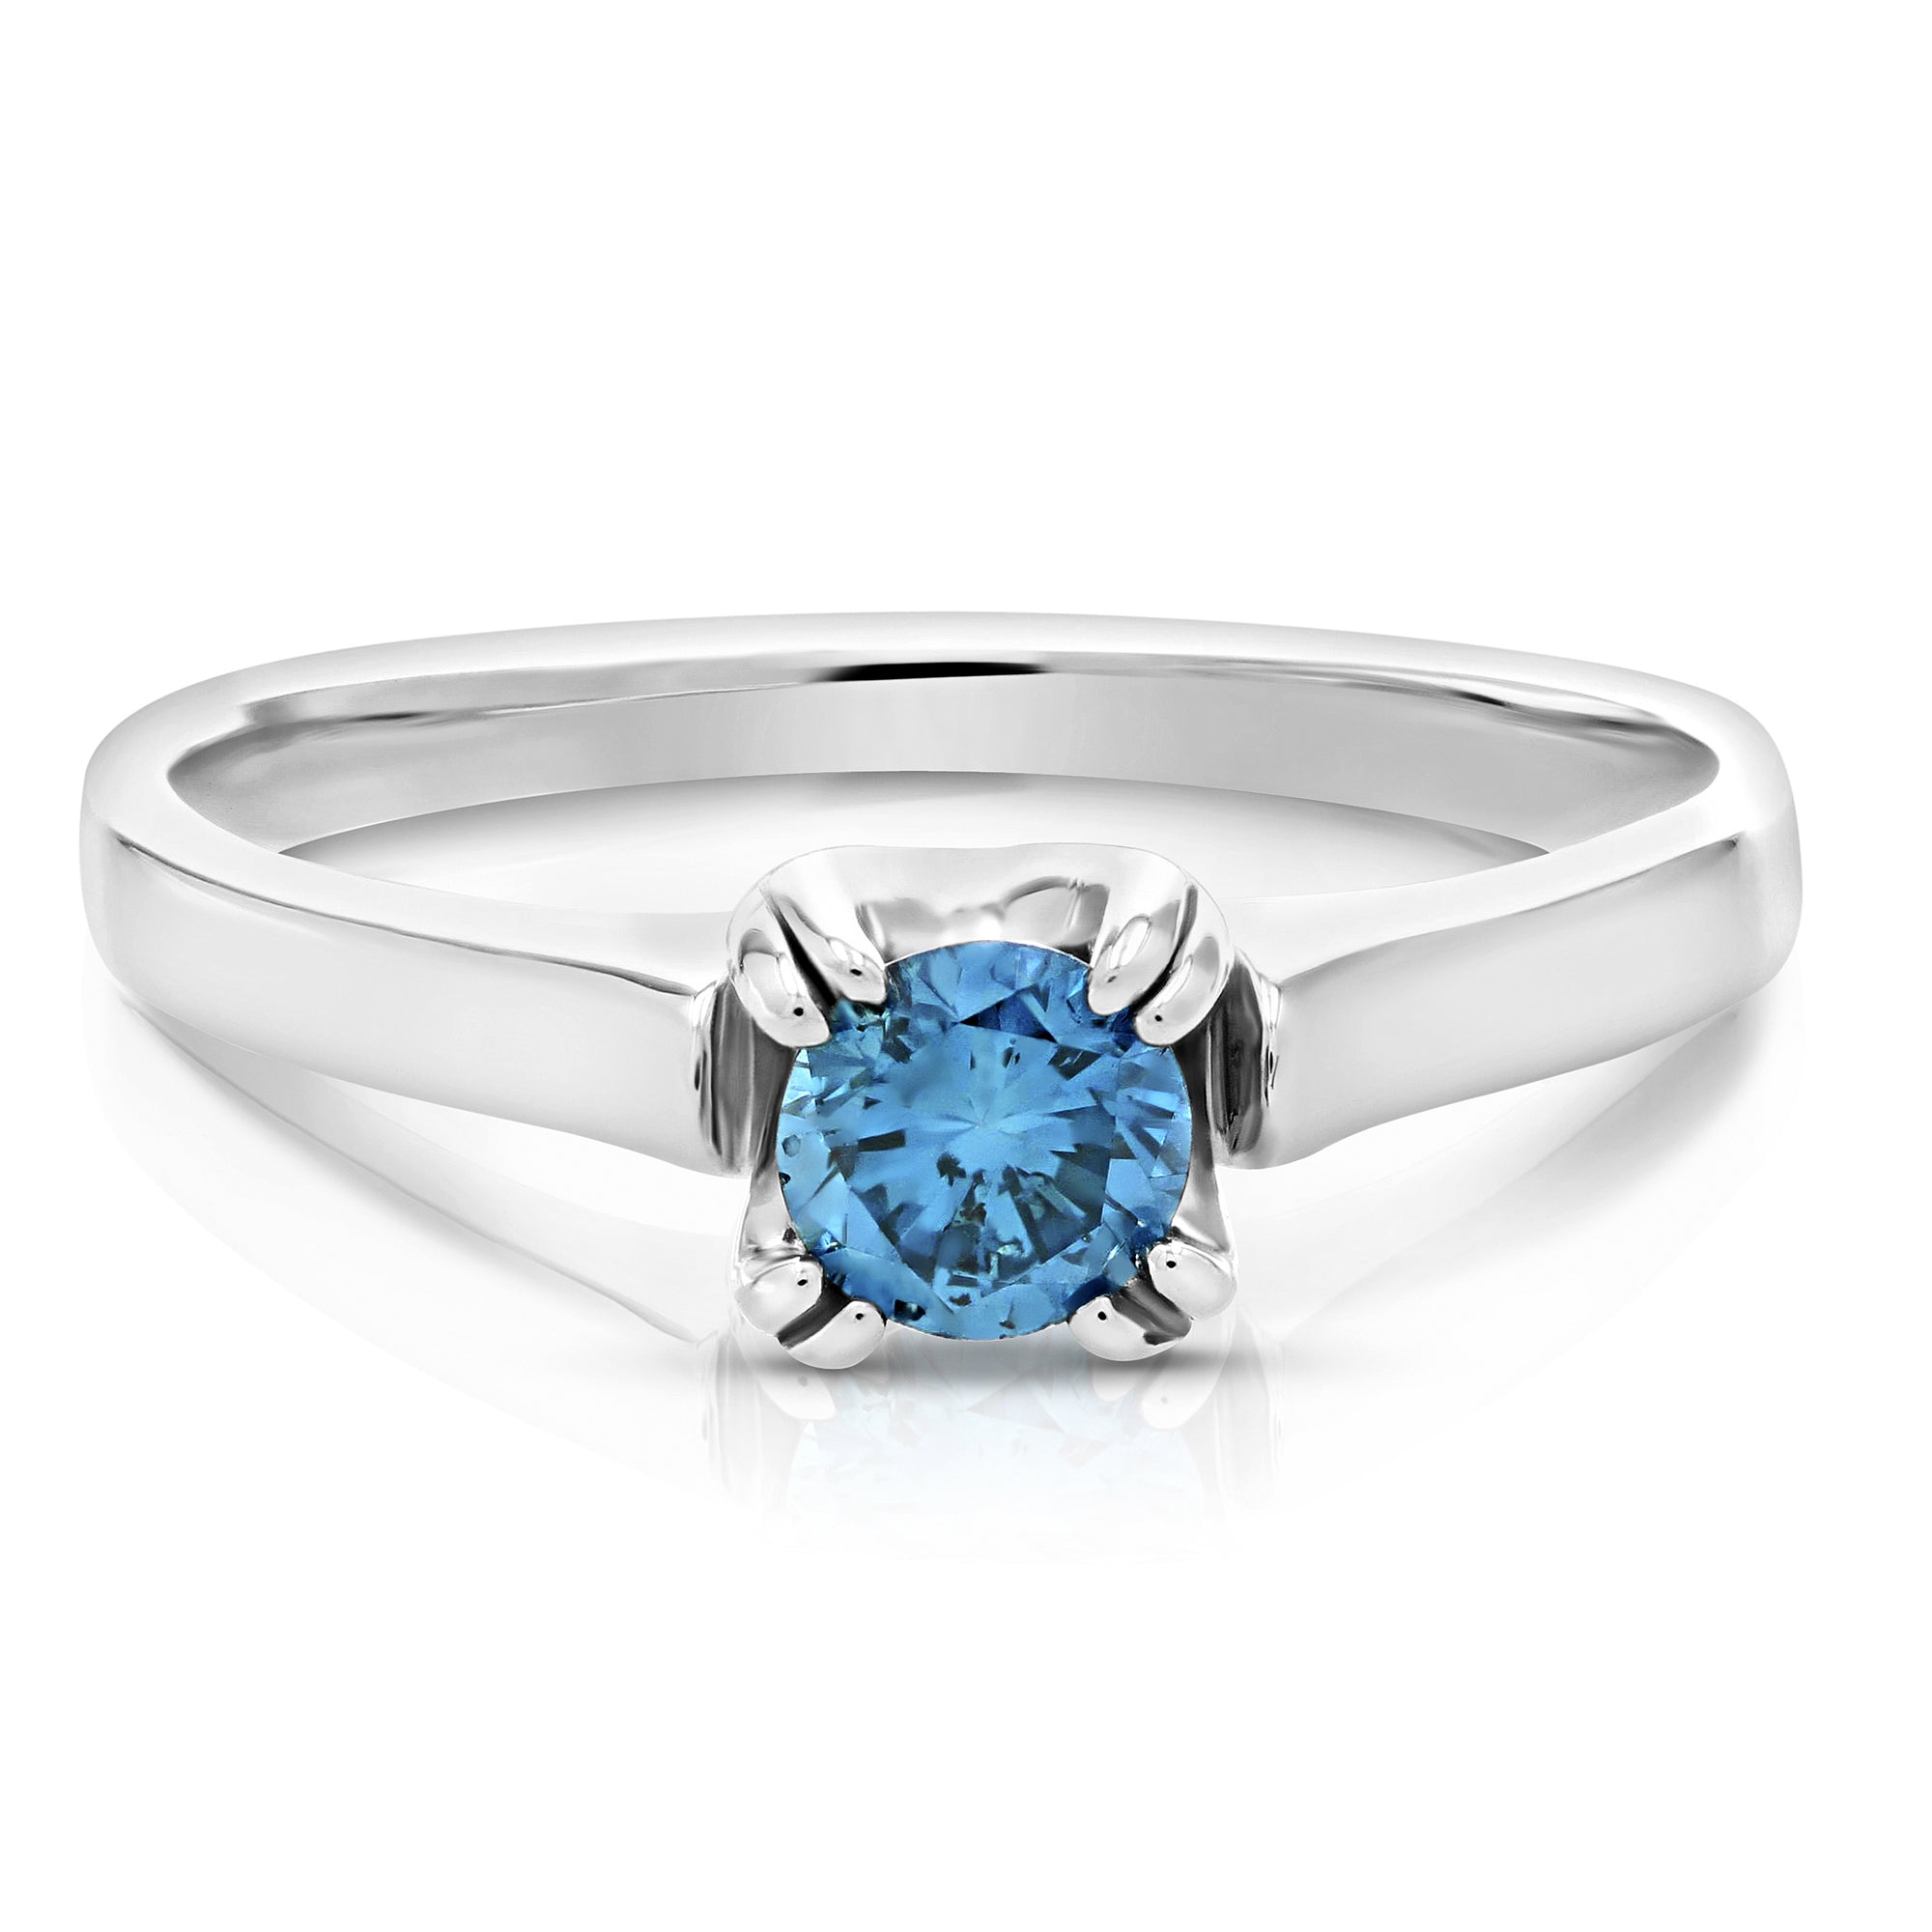 1/2 cttw Blue Diamond Solitaire Ring 14K White Gold Engagement Bridal Size 9.5